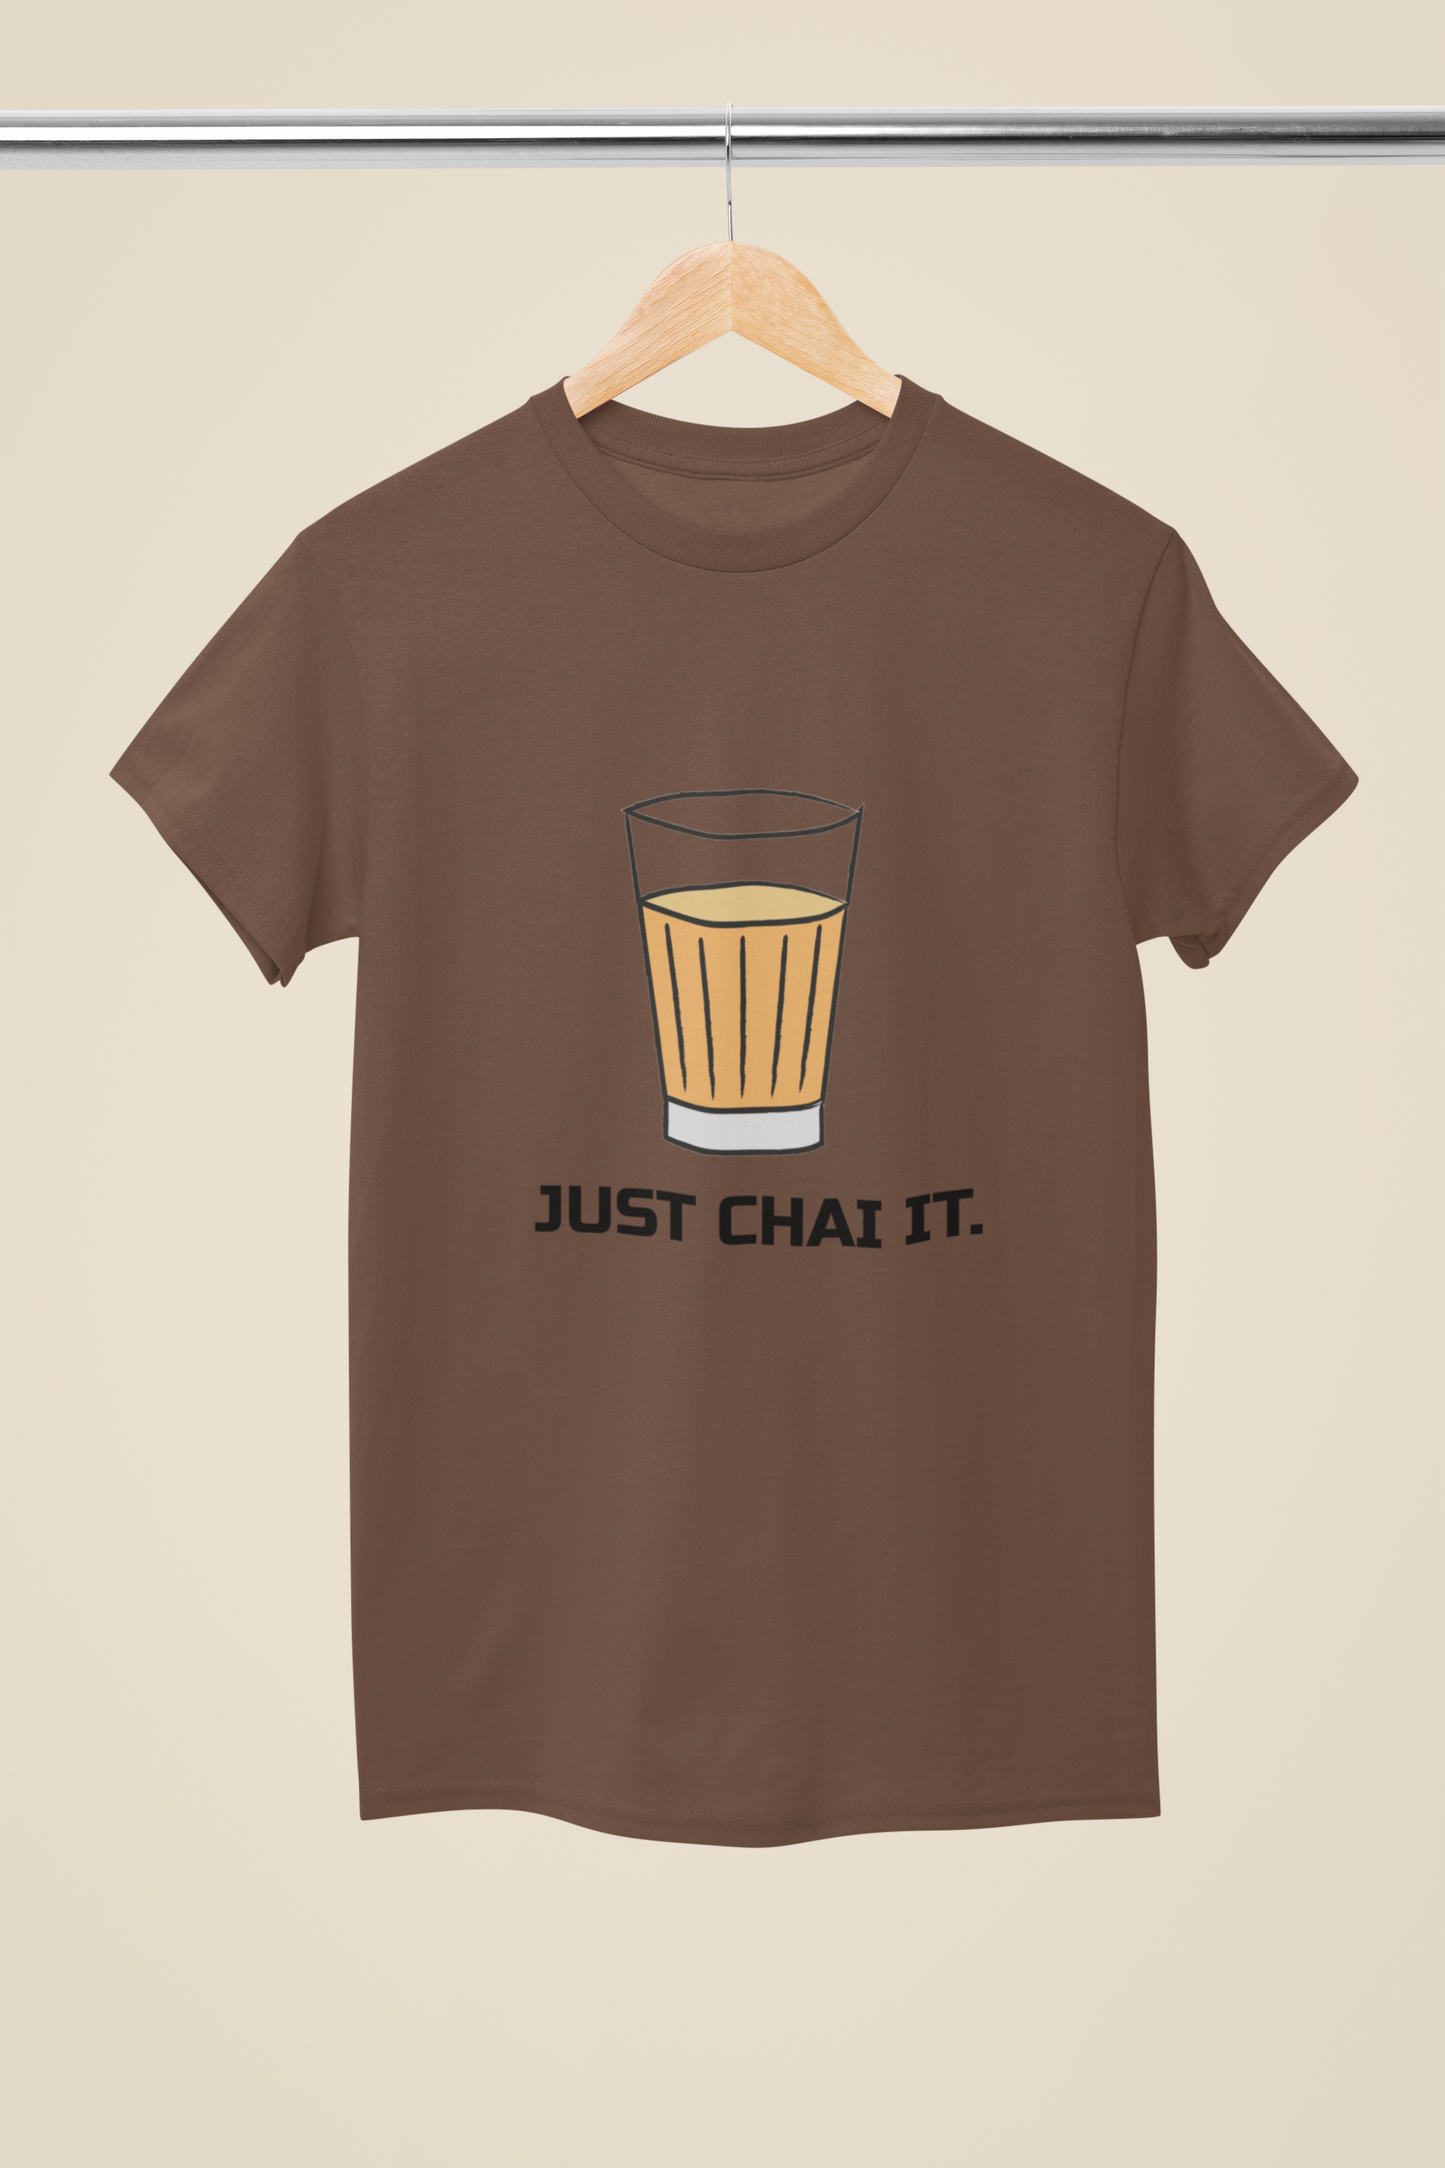 Just Chai It. - Adult Tee